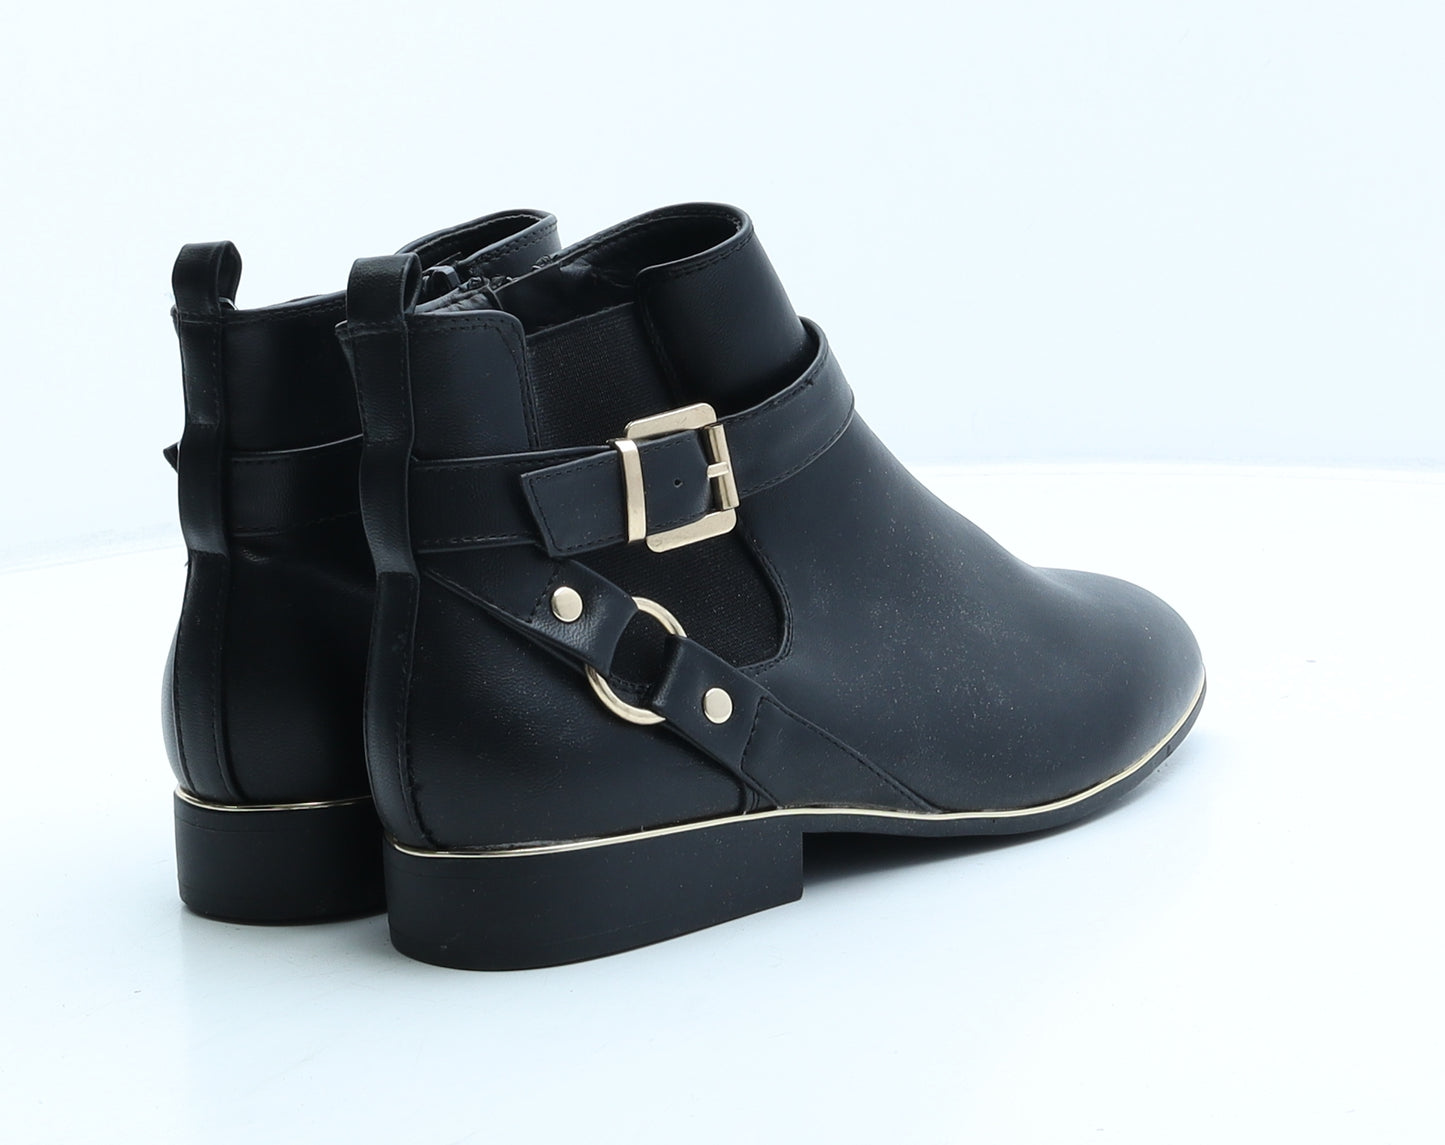 Primark Womens Black Leather Chelsea Boot UK 7 40